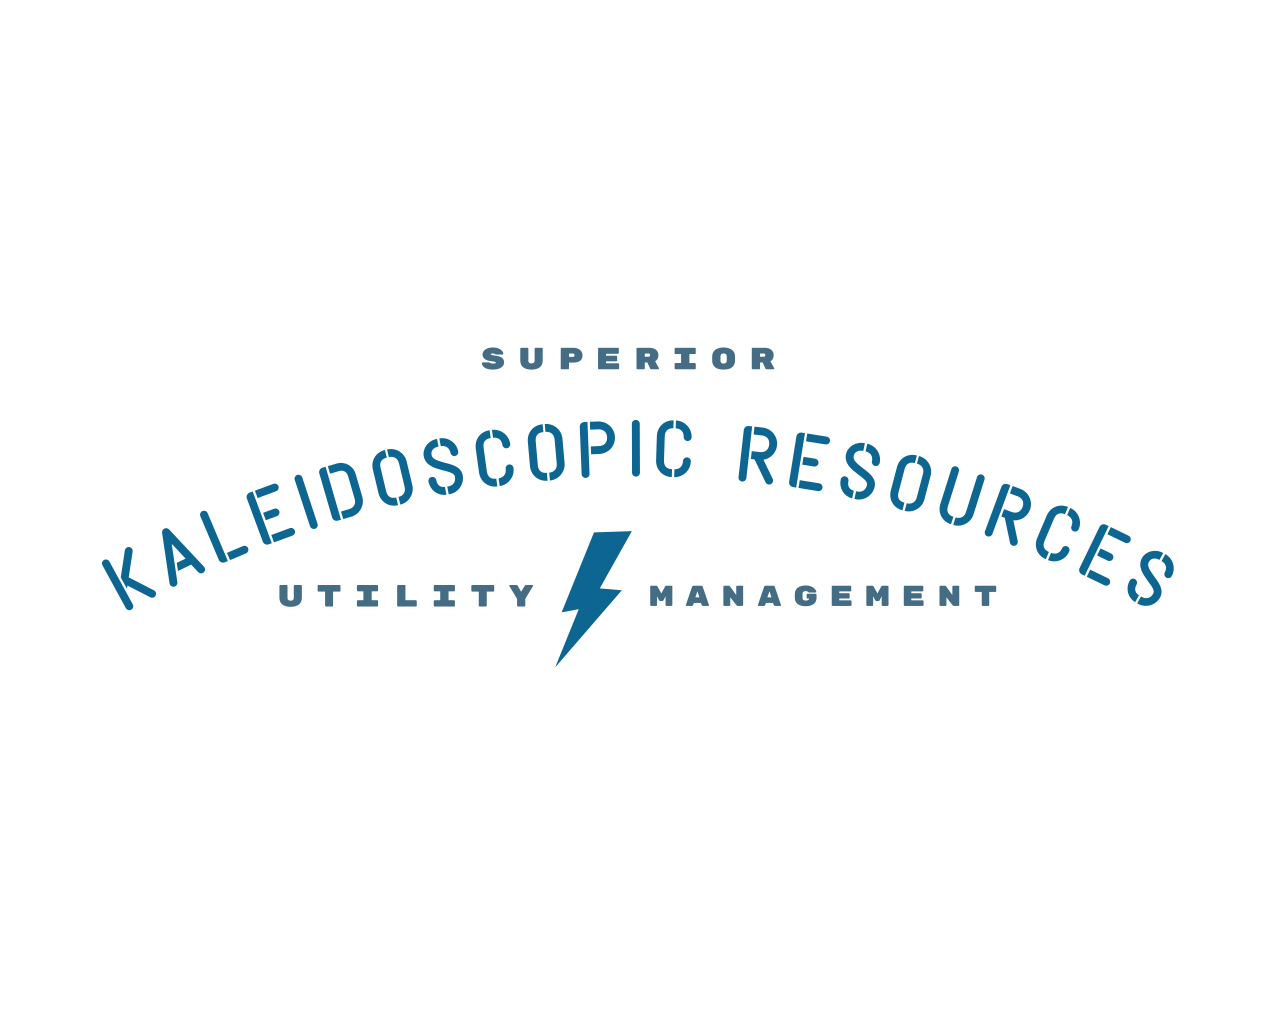 Kaleidoscopic Resources